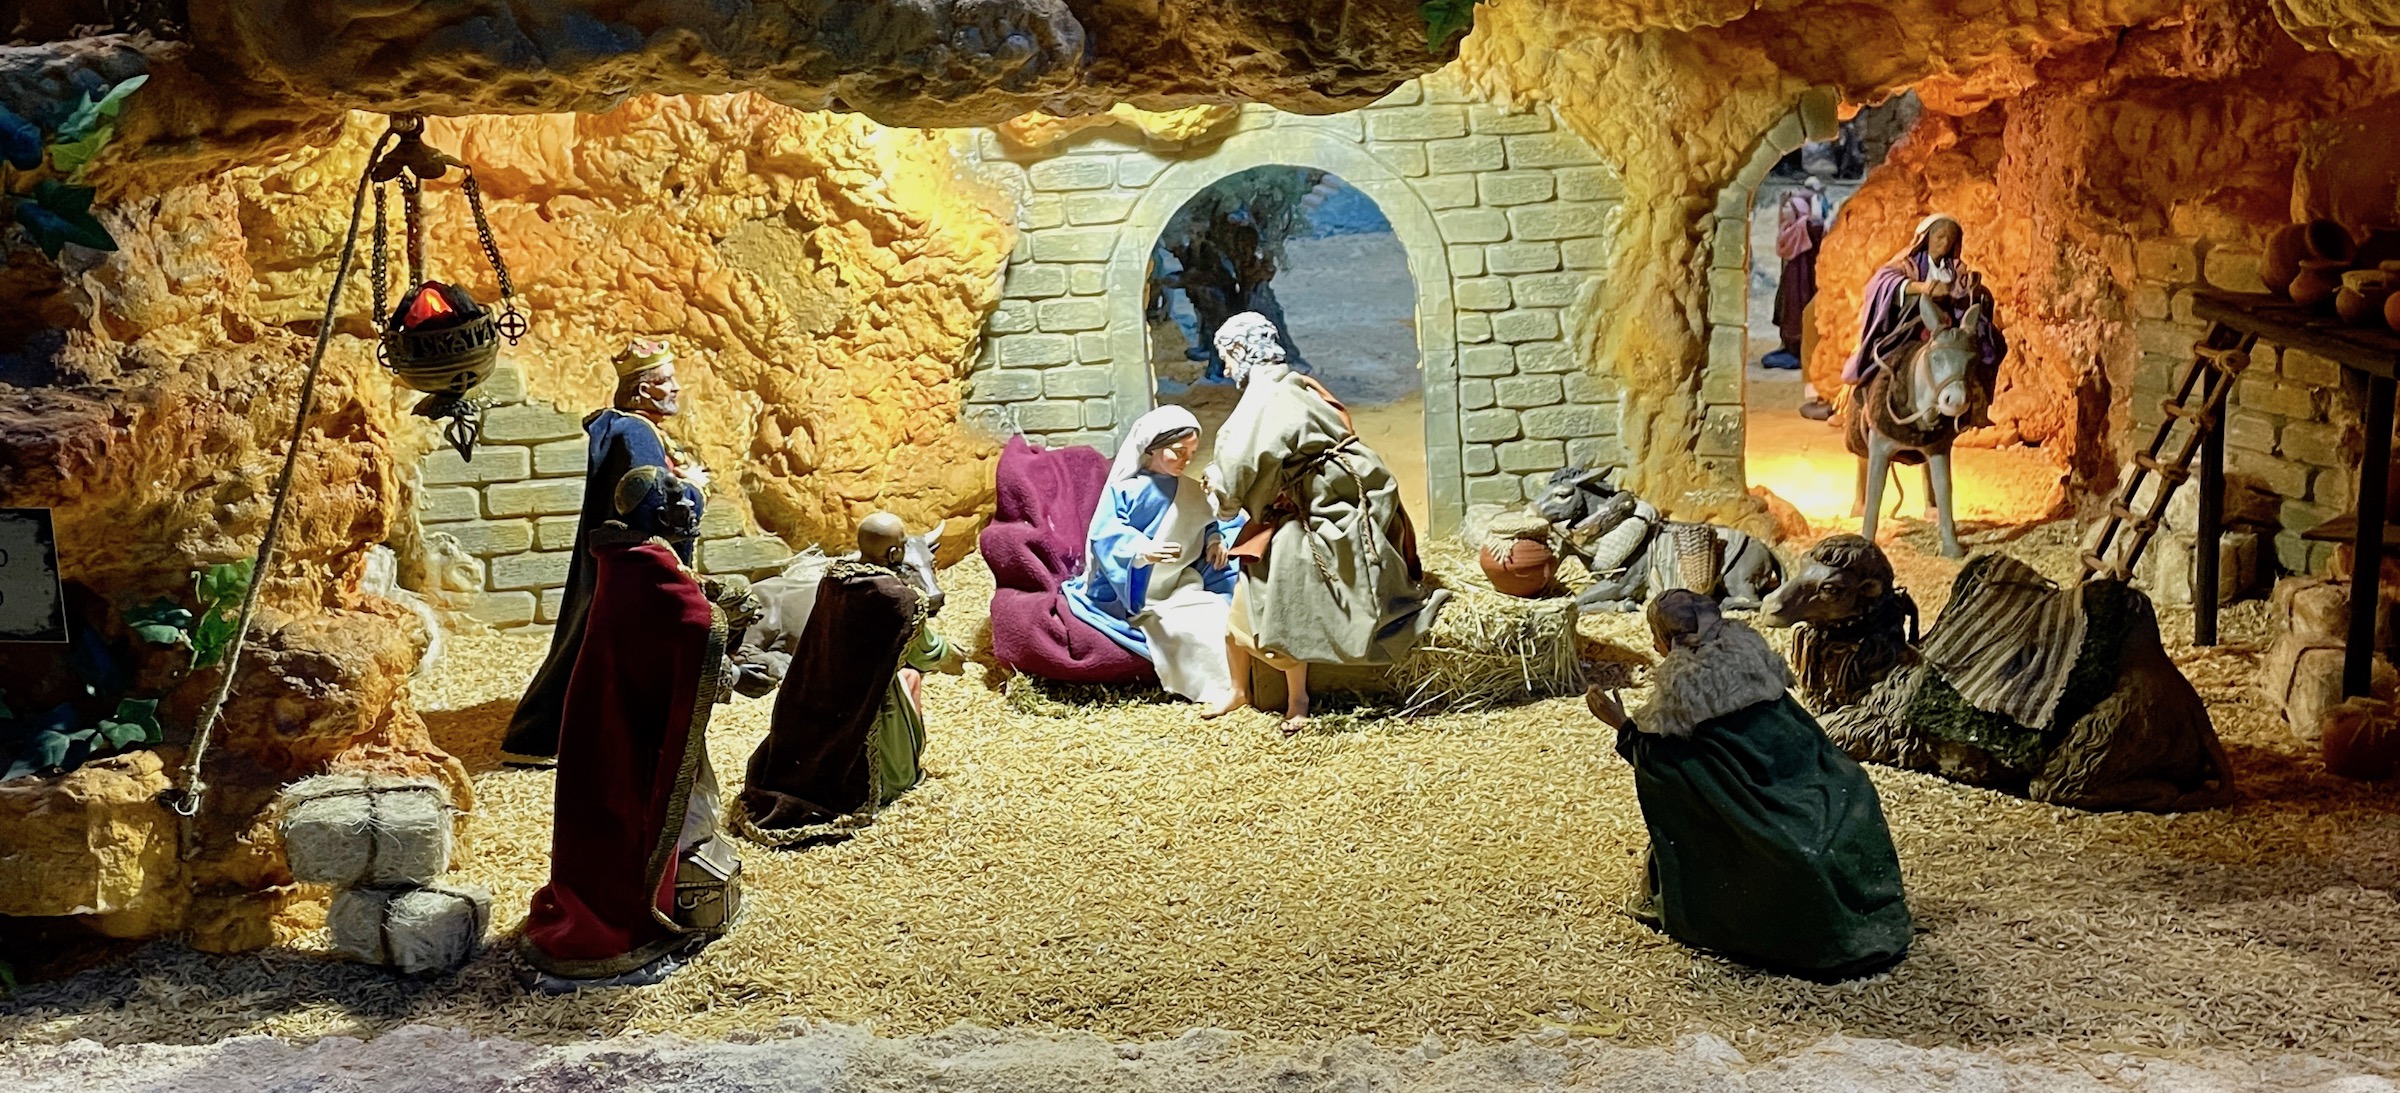 The Nativity - Quito Highlights